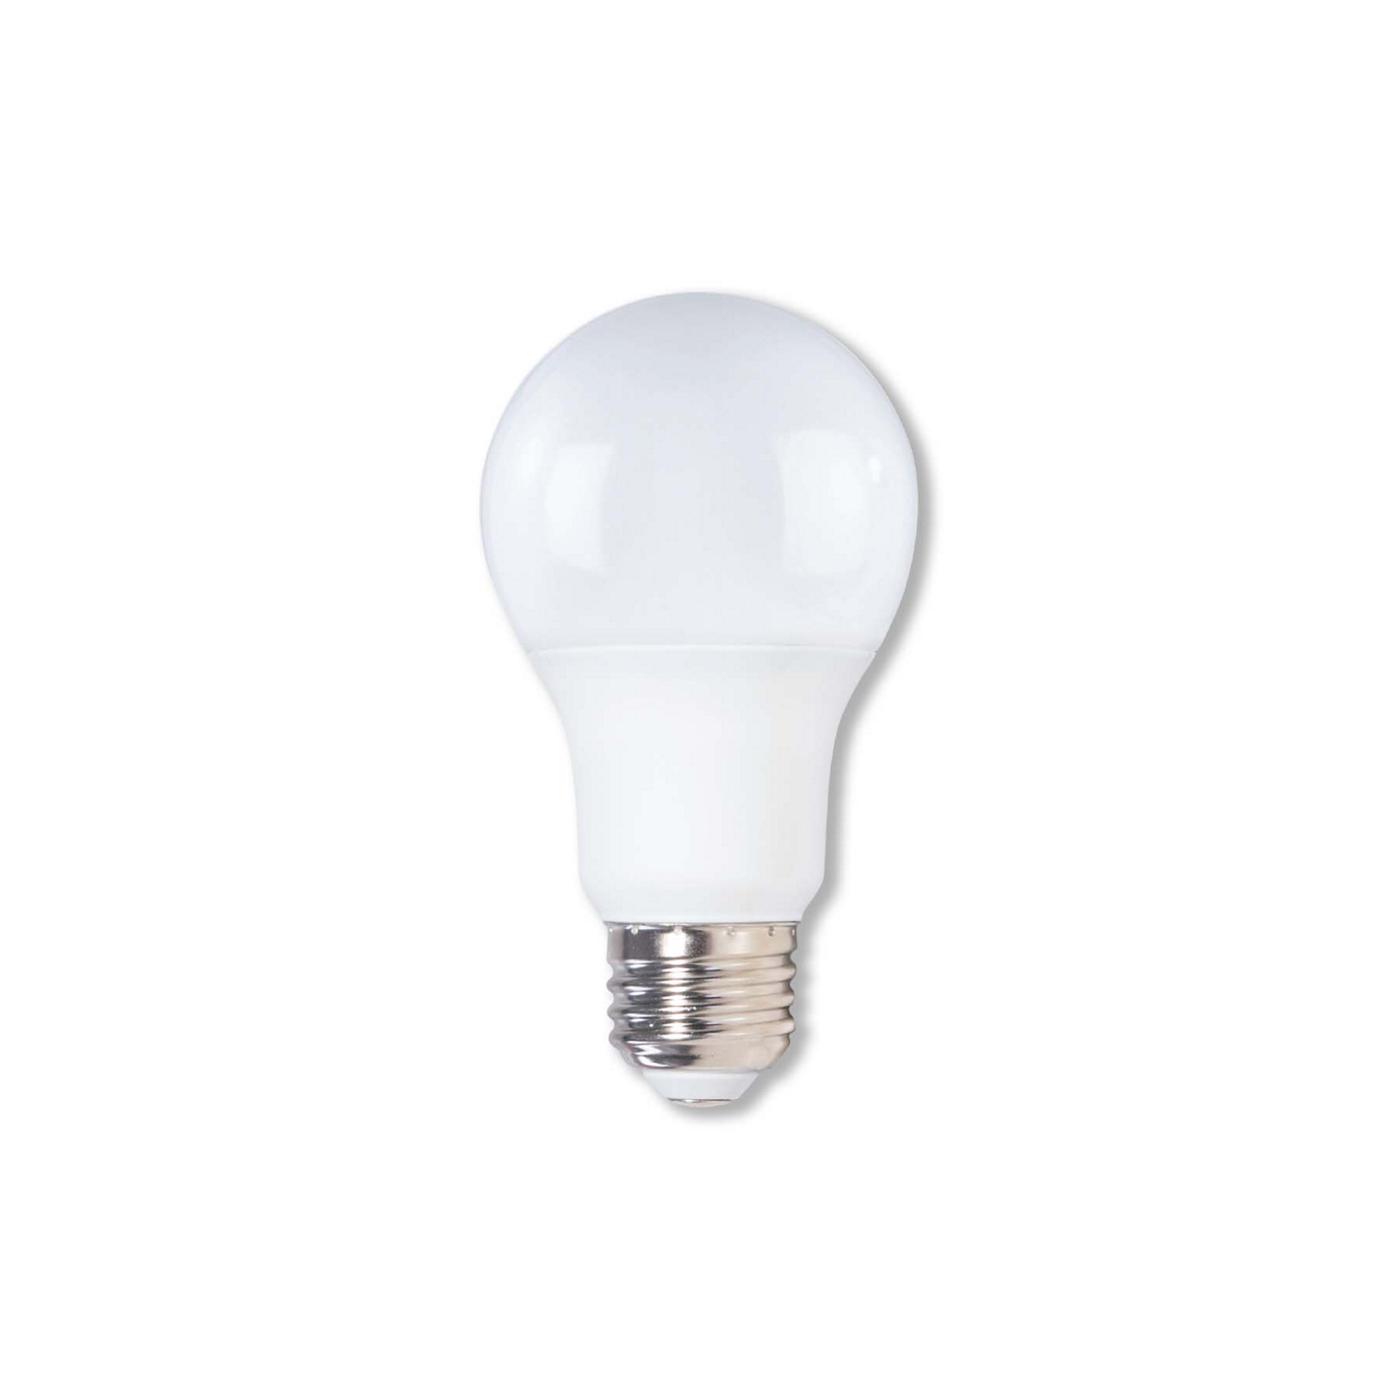 H-E-B Double Life A19 60-Watt LED Light Bulbs - Bright White; image 2 of 2